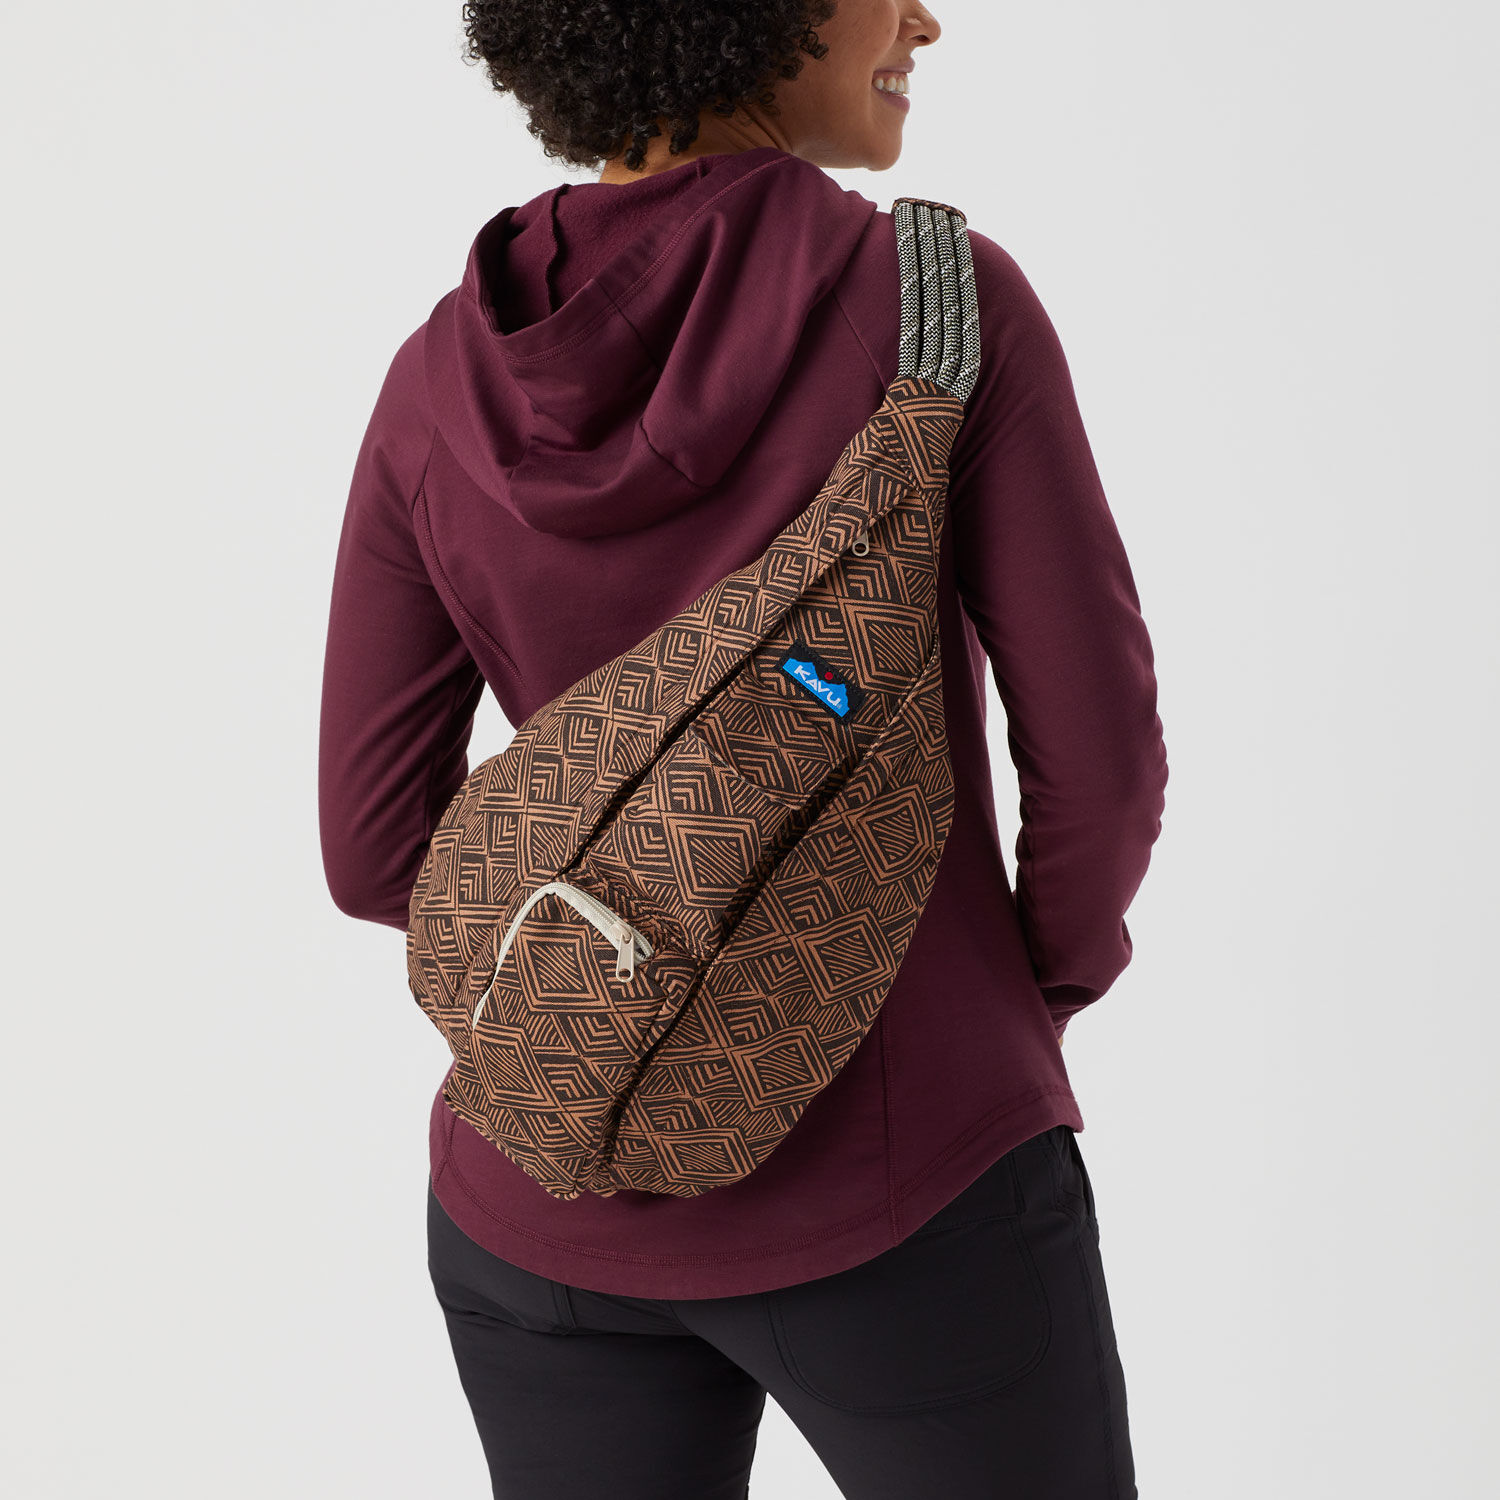 Buy KAVU Original Rope Sling Bag Polyester Crossbody Backpack - Arrow  Dynamic at Amazon.in